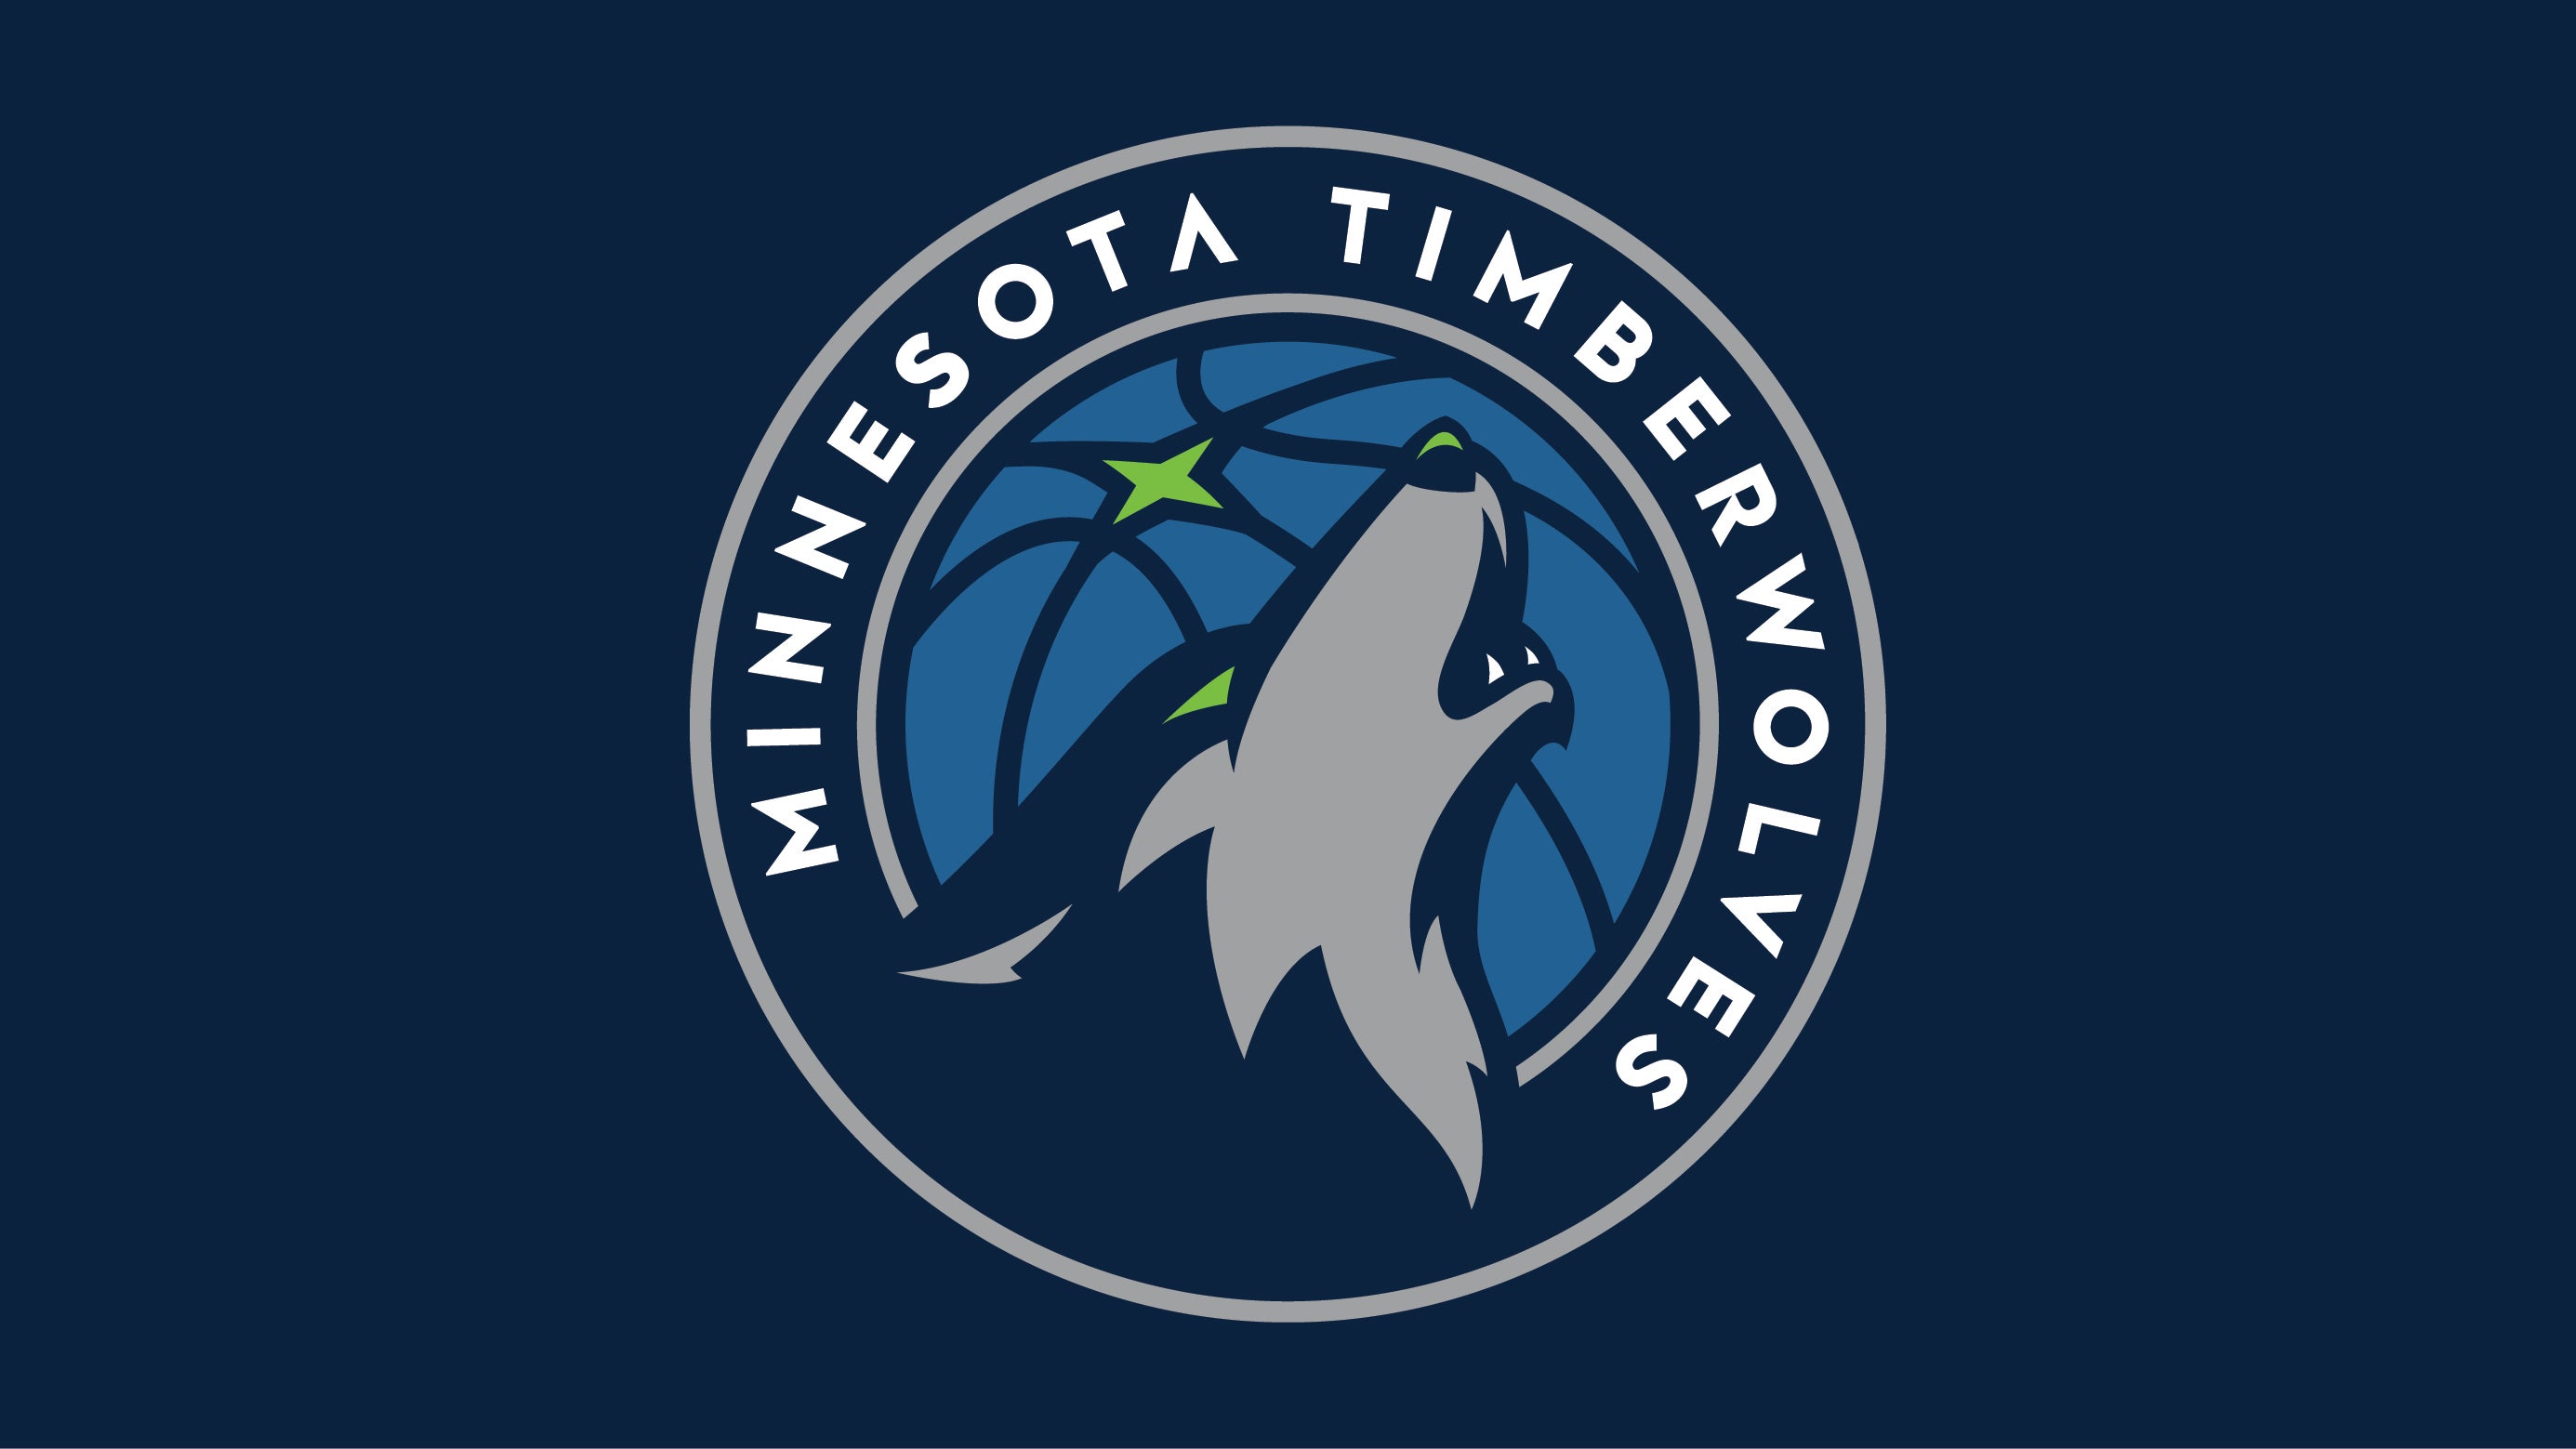 Minnesota Timberwolves vs. Toronto Raptors